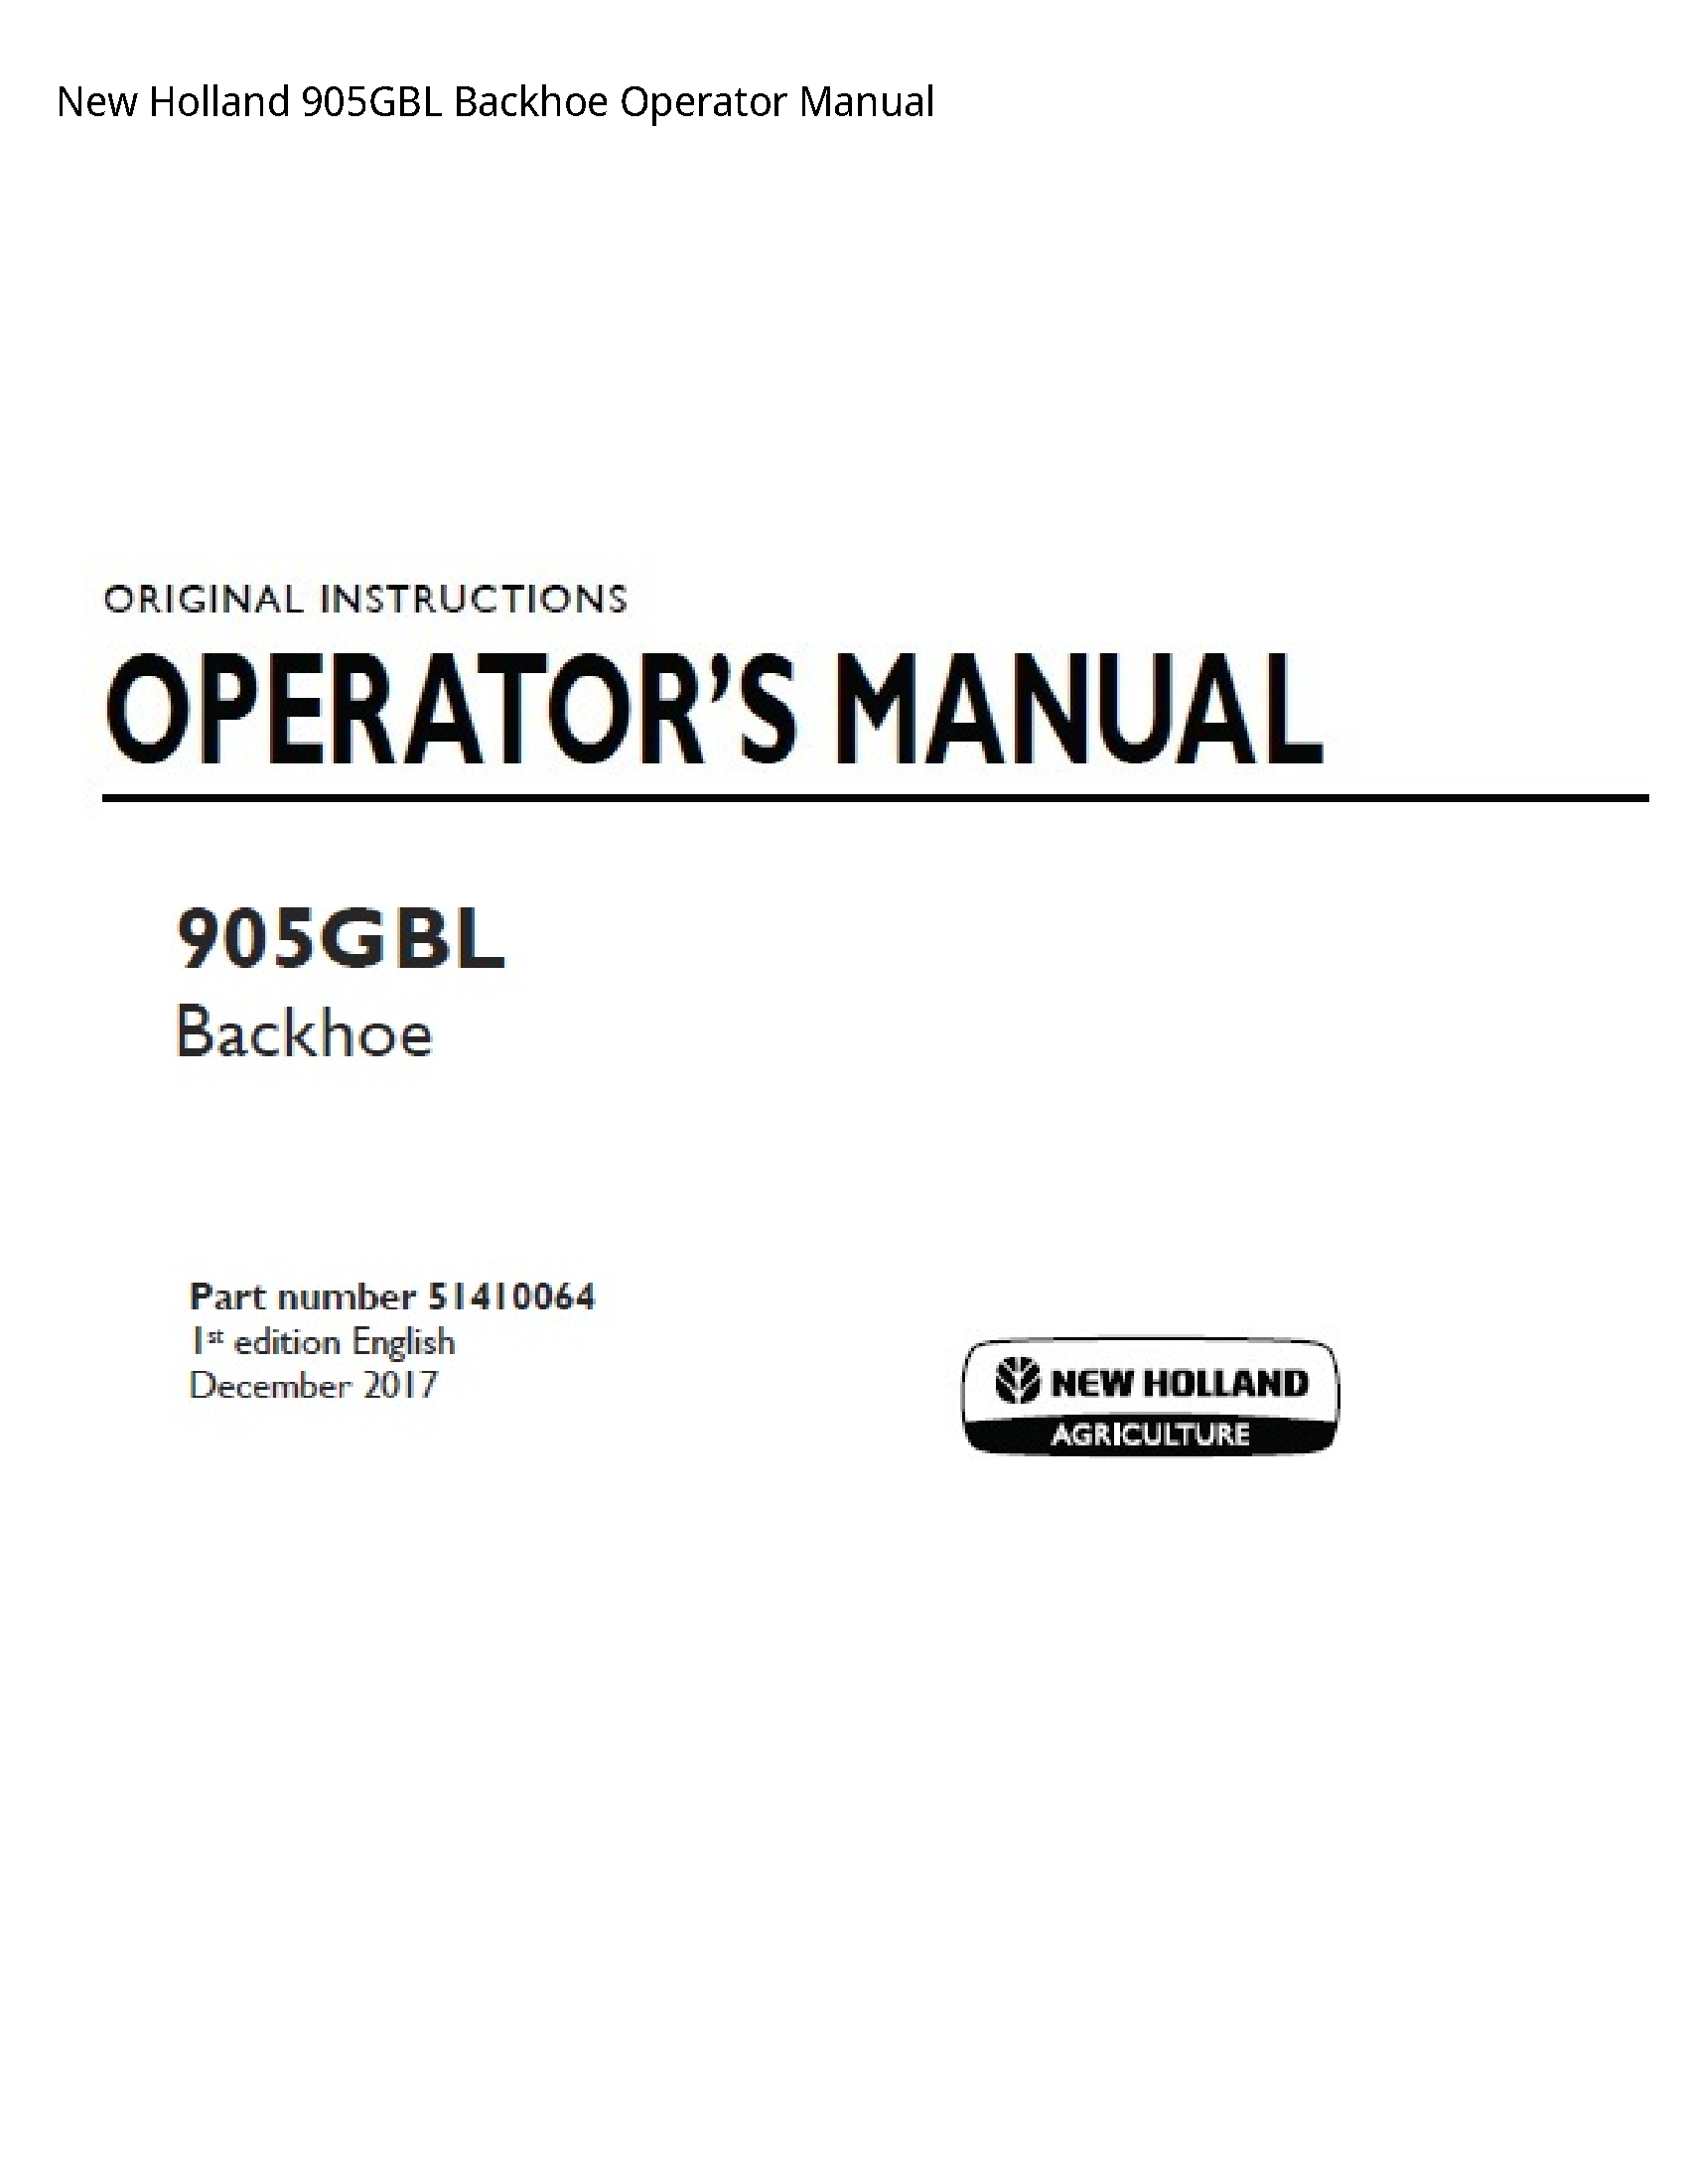 New Holland 905GBL Backhoe Operator manual